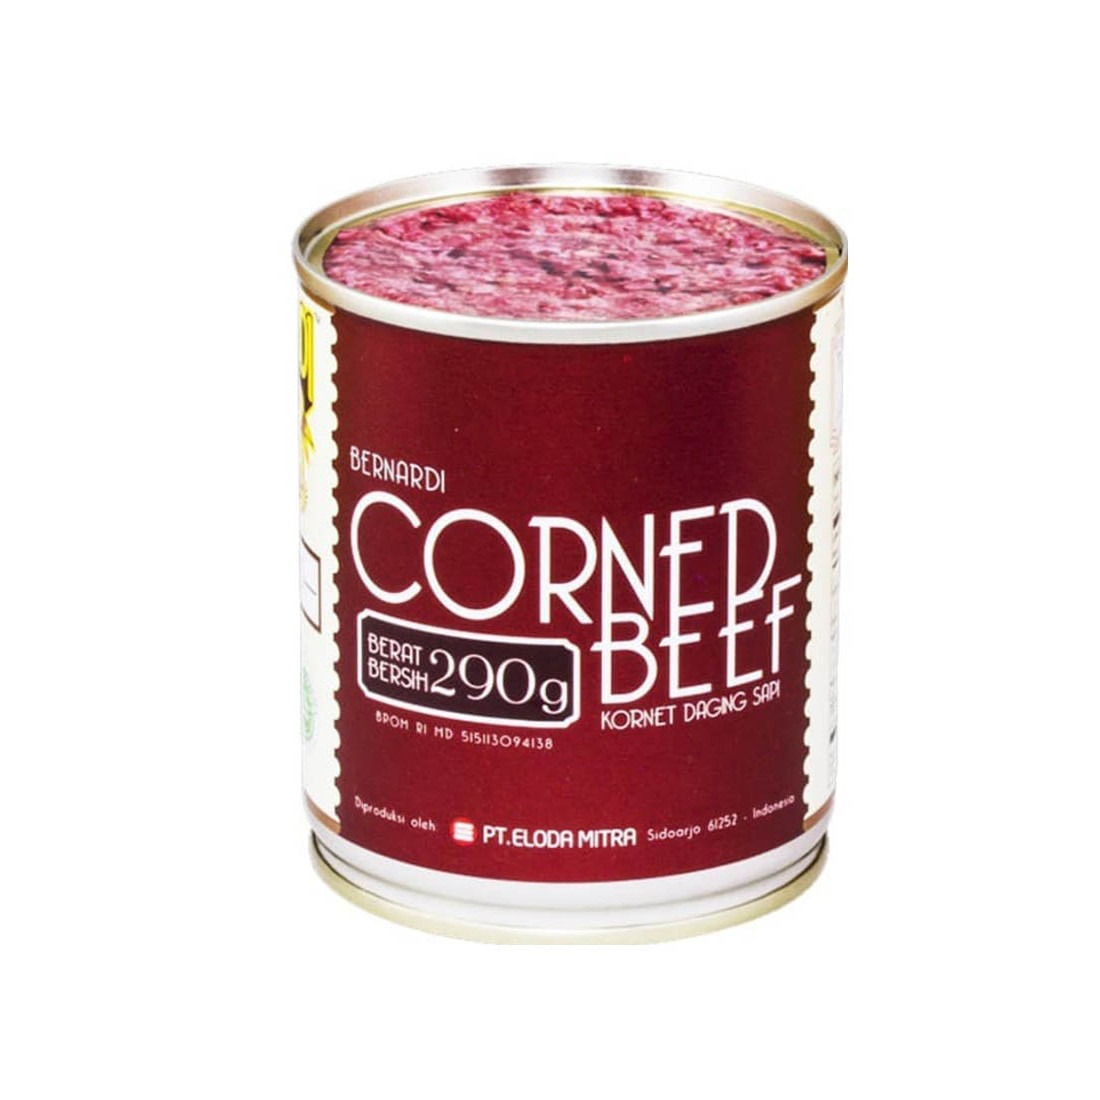 Bernardi 290g Corned Beef